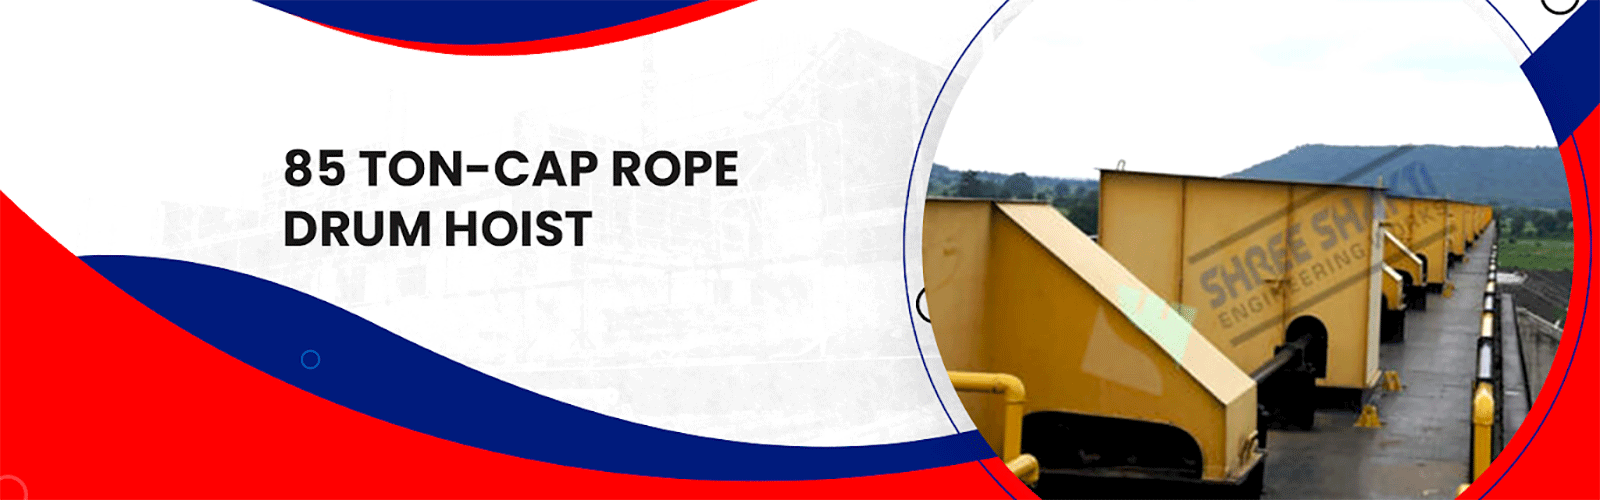 Rope Drum Hoist manufacturer